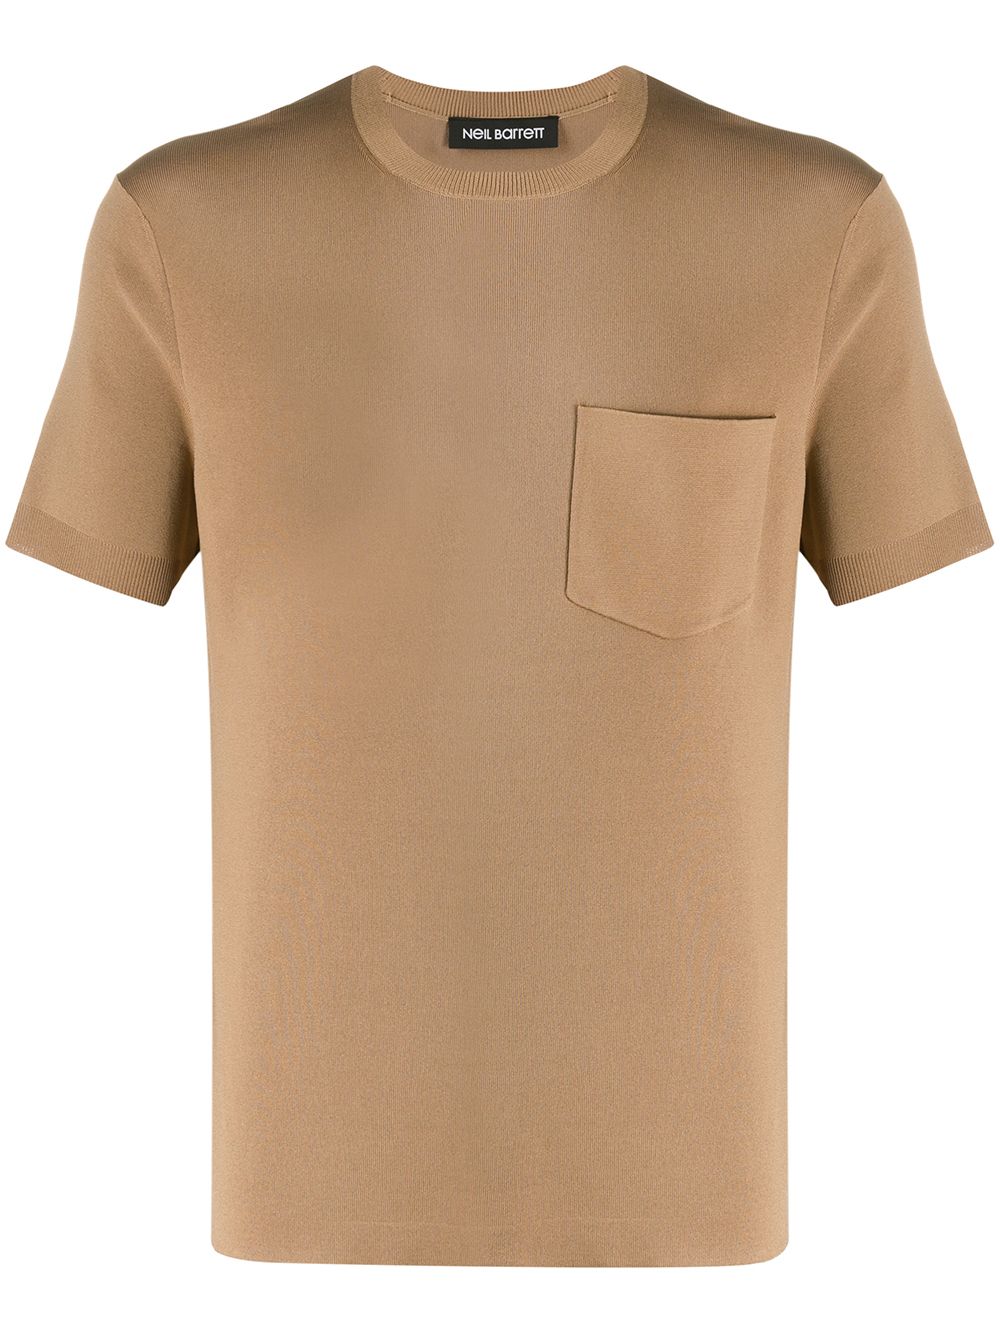 Neil Barrett Chest Pocket Knitted T-shirt In Brown